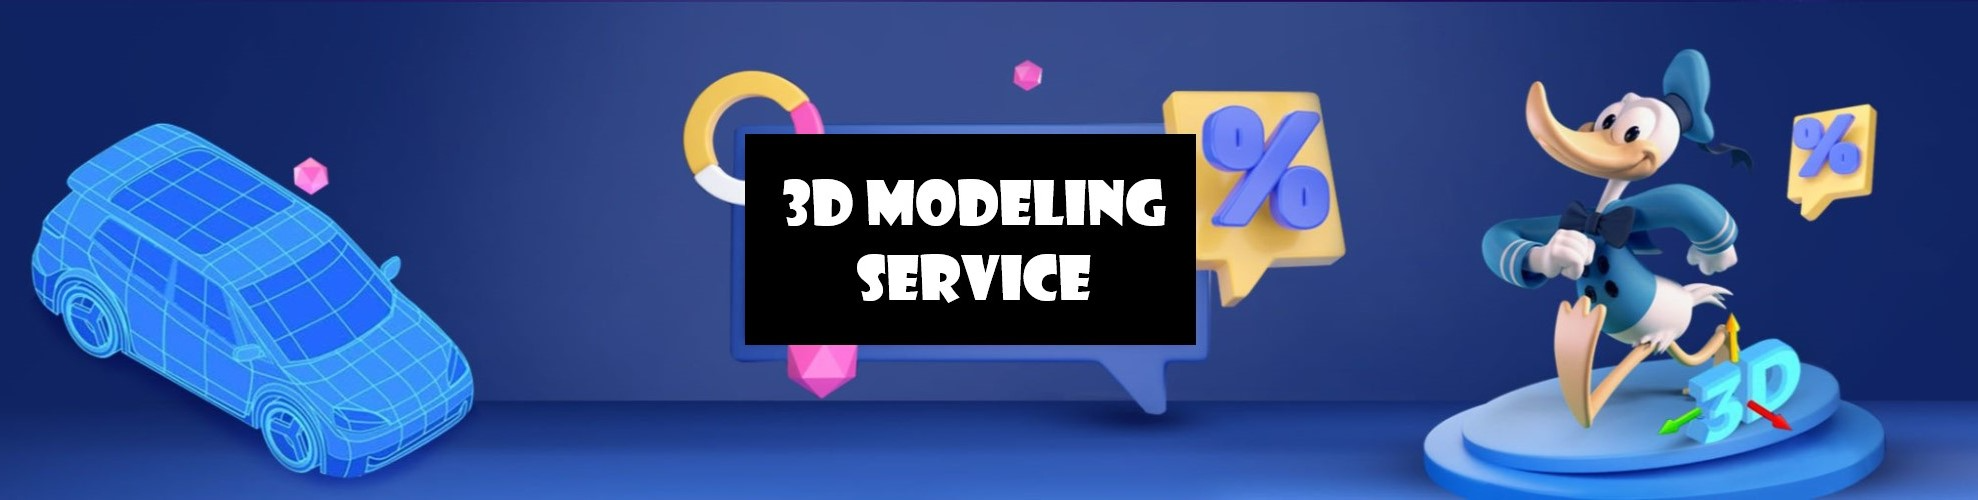 3D Modeling Service